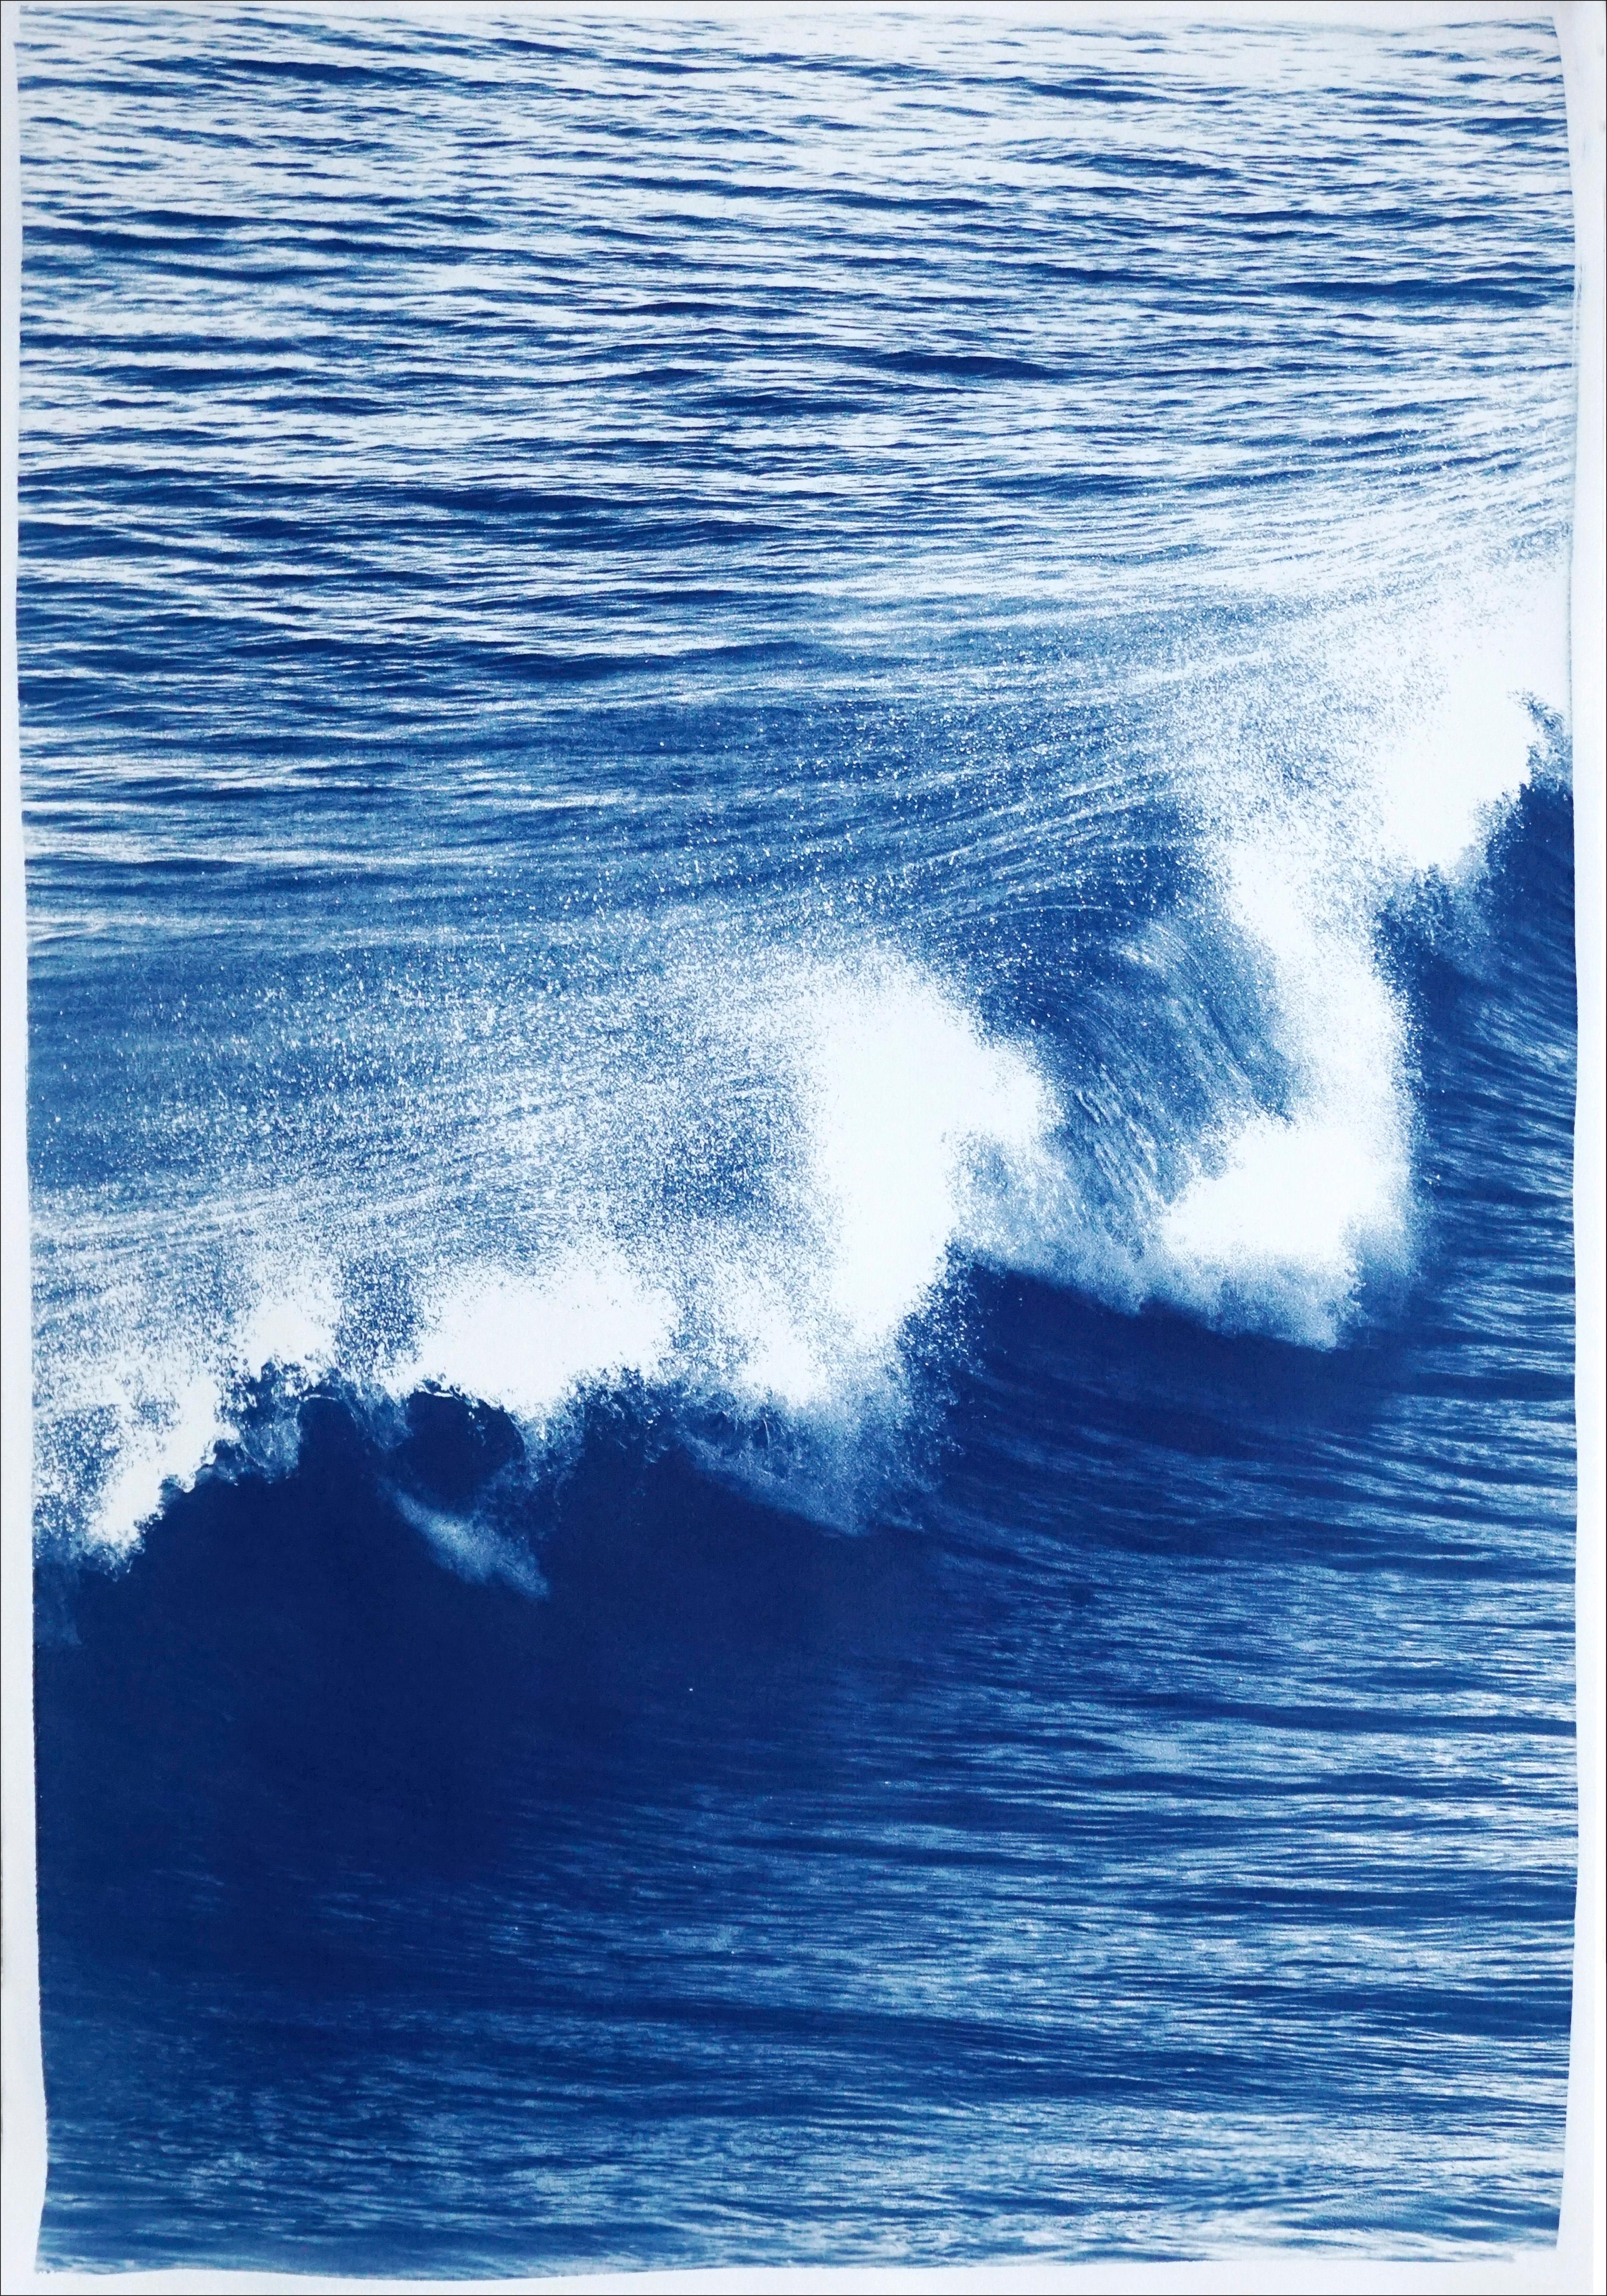 Los Angeles Crashing Waves Triptych, Nautical, Handmade Cyanotype in Blue Tones - Photorealist Print by Kind of Cyan